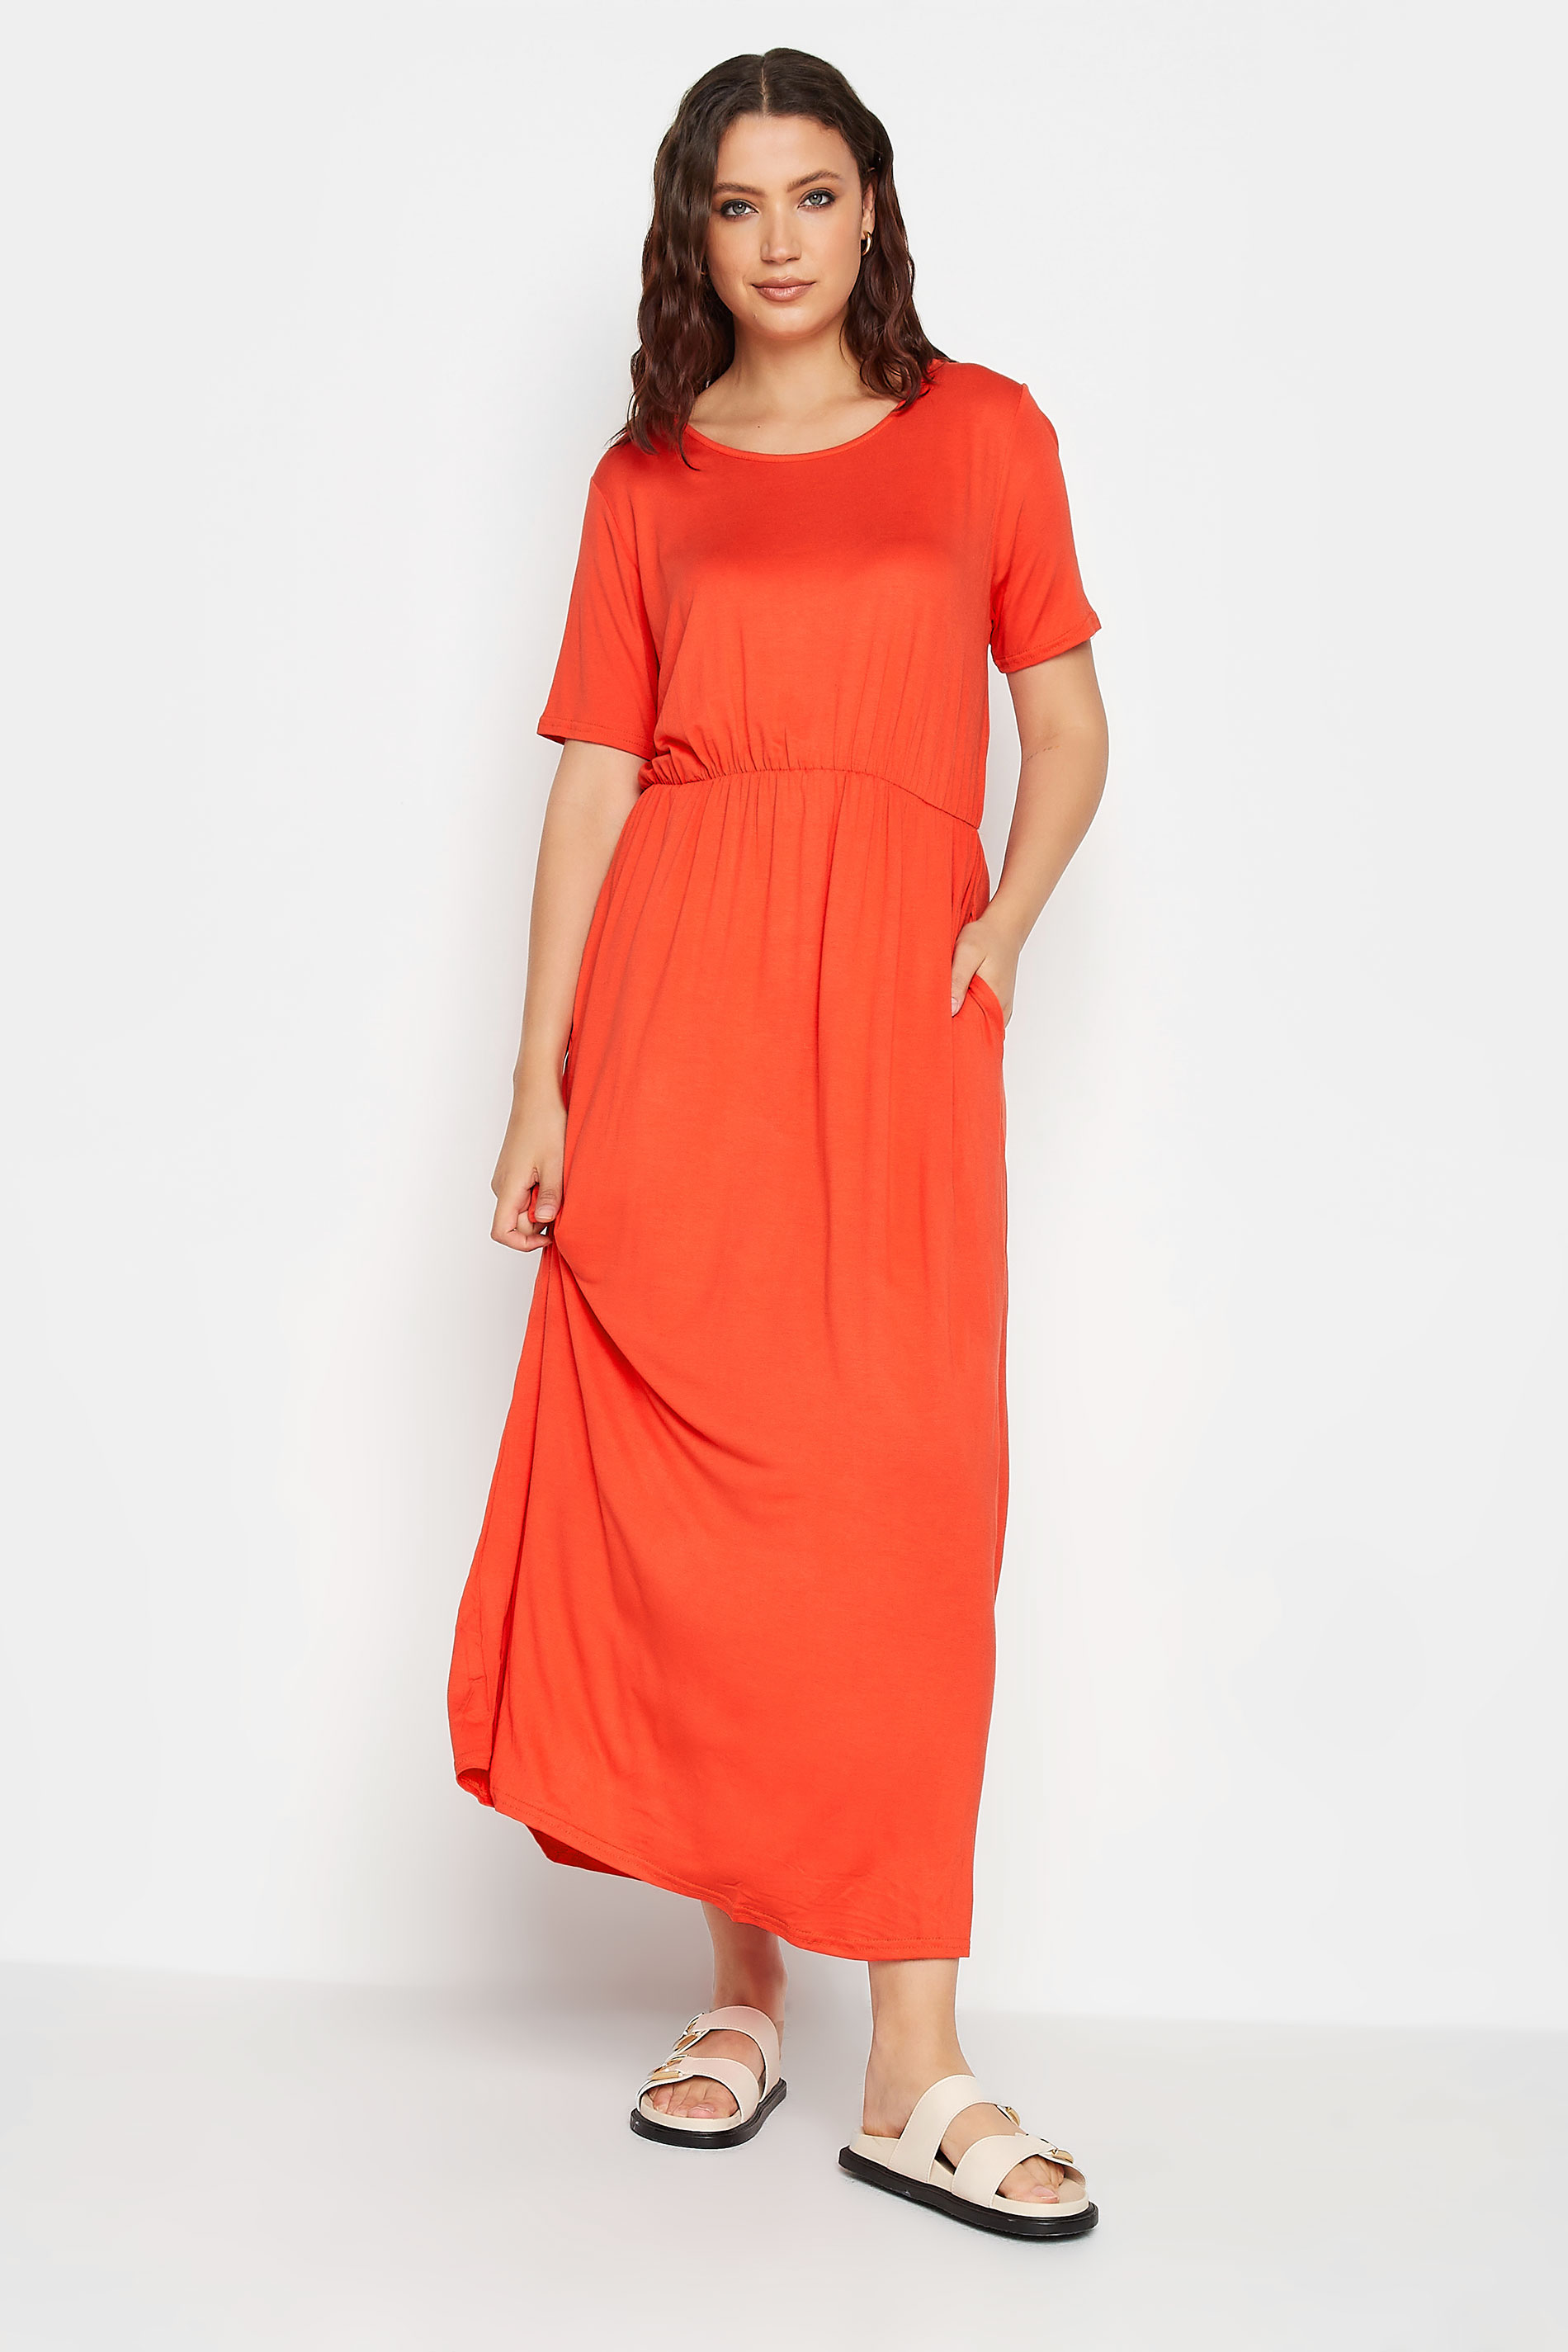 LTS Tall Women's Orange Pocket Midaxi Dress | Long Tall Sally  2